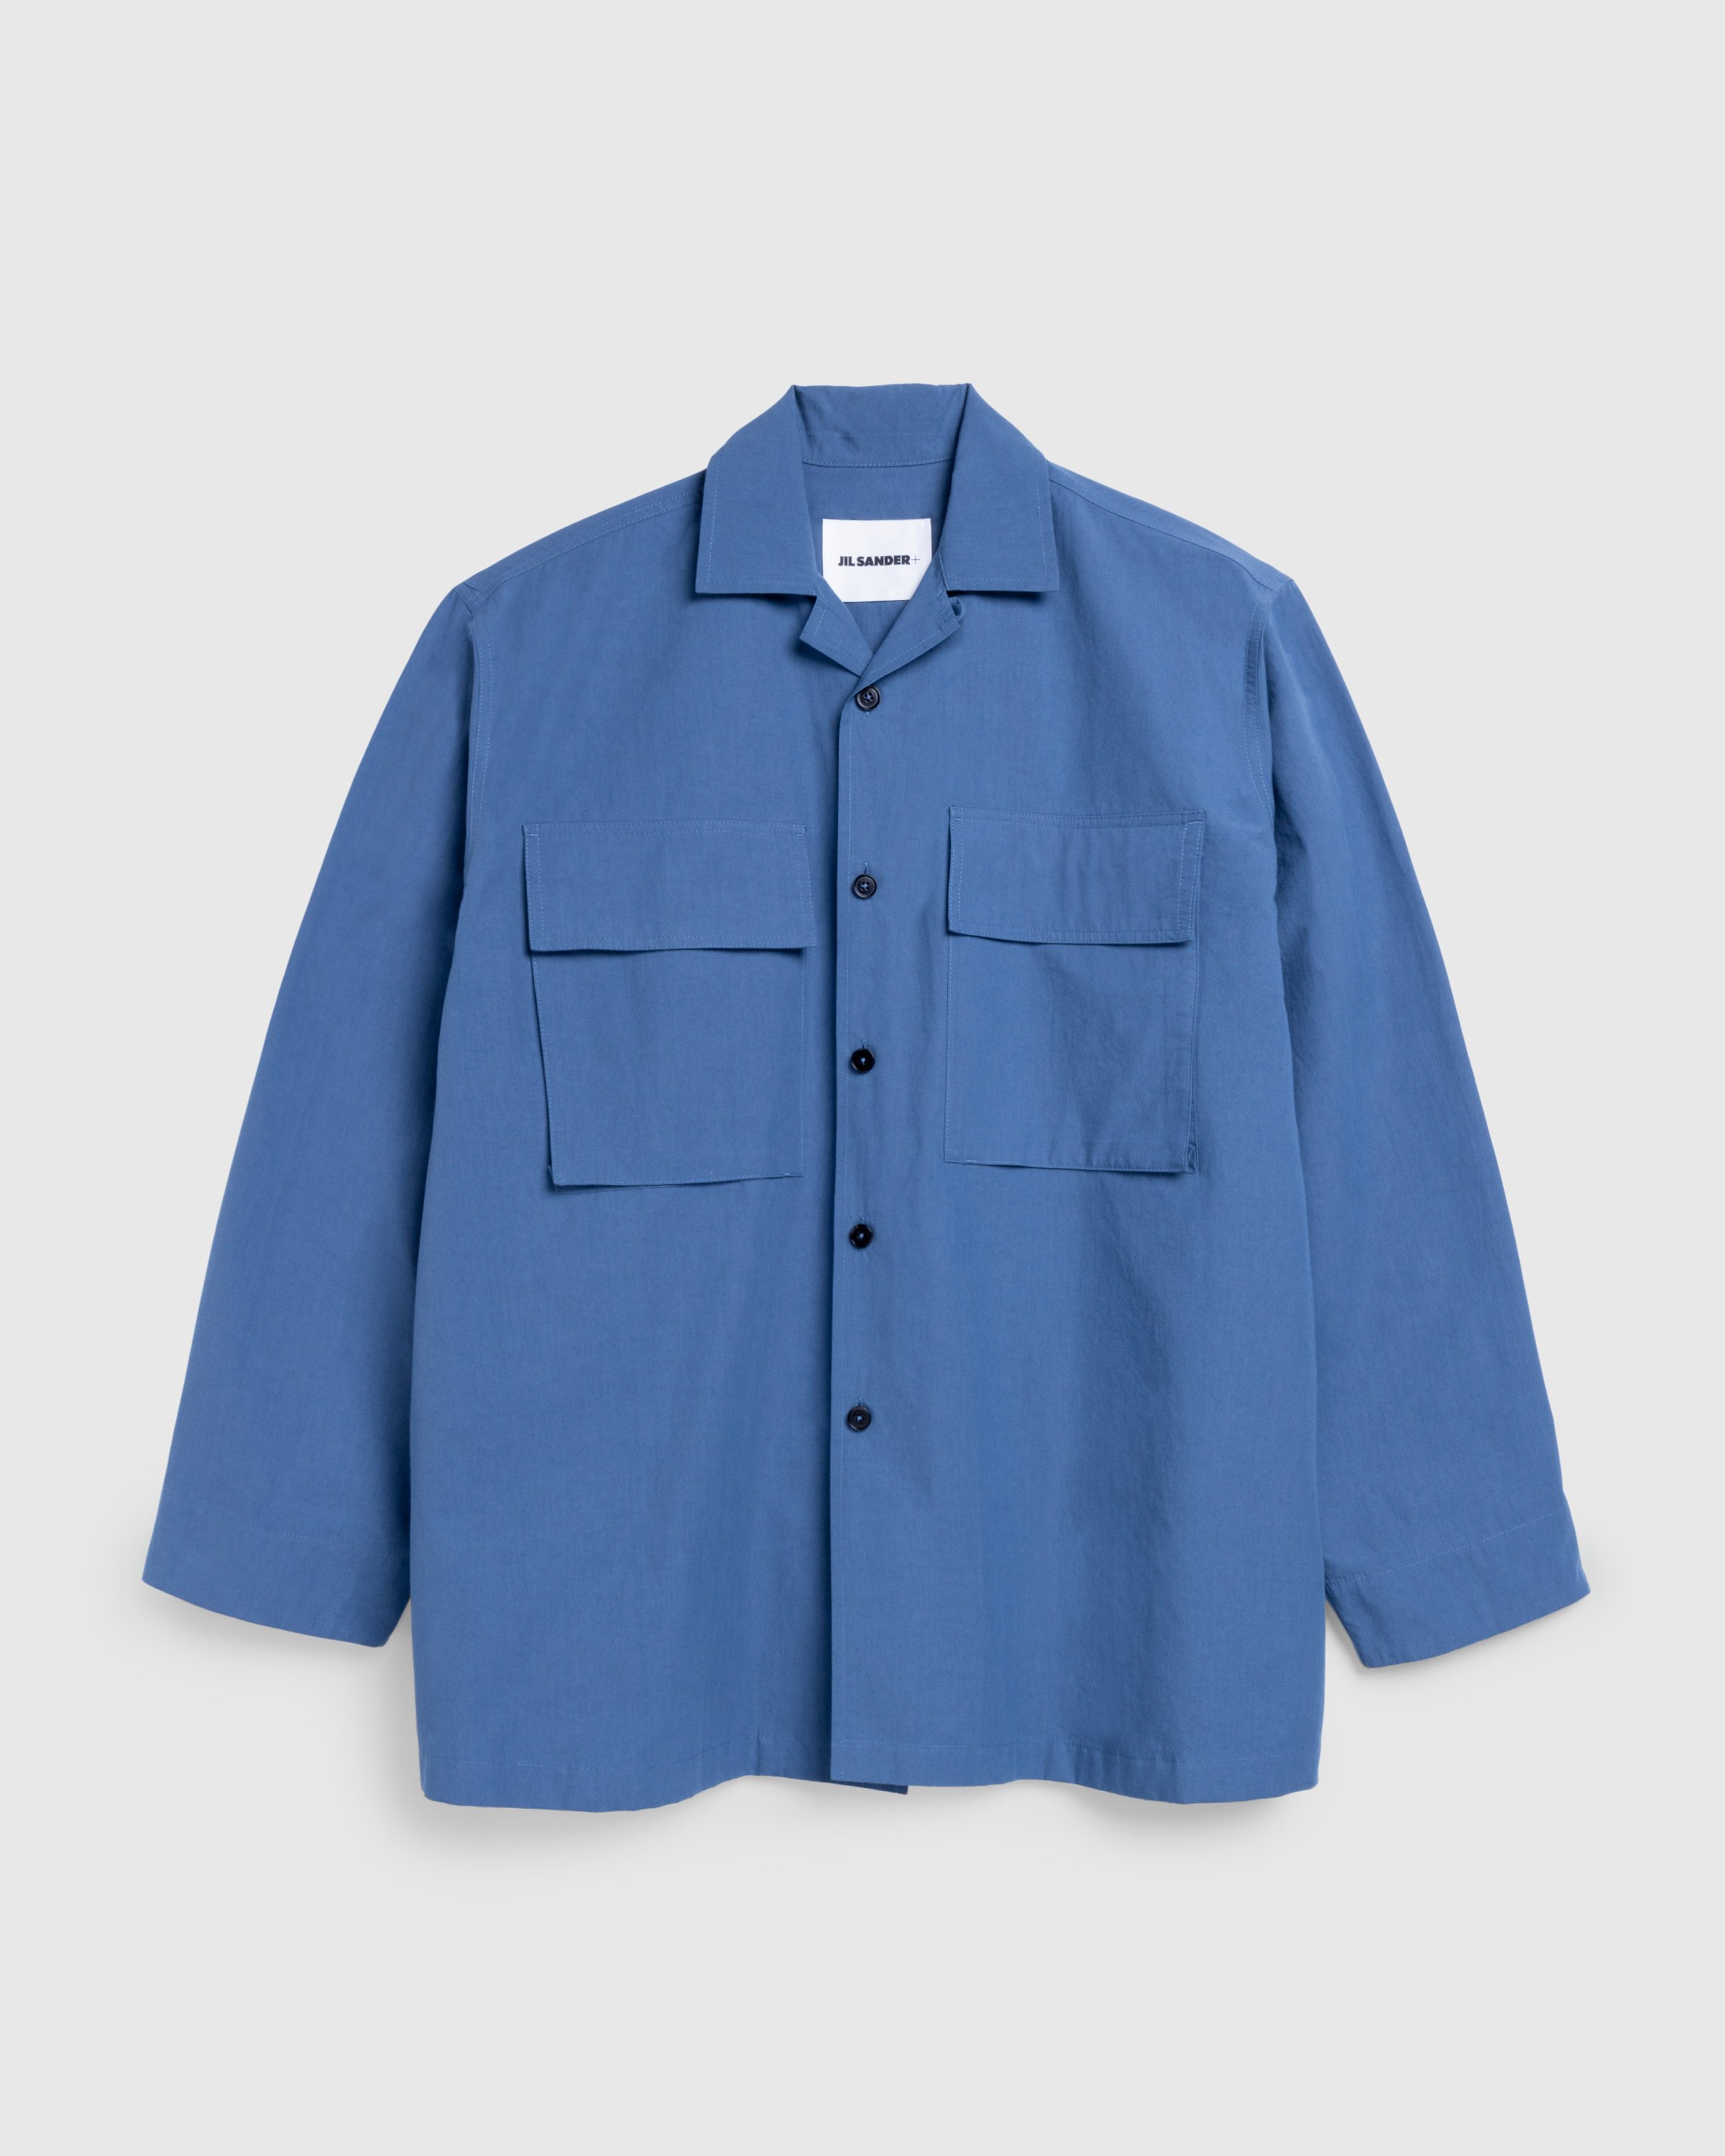 Jil Sander - Shirt 40 - Clothing - Blue - Image 1